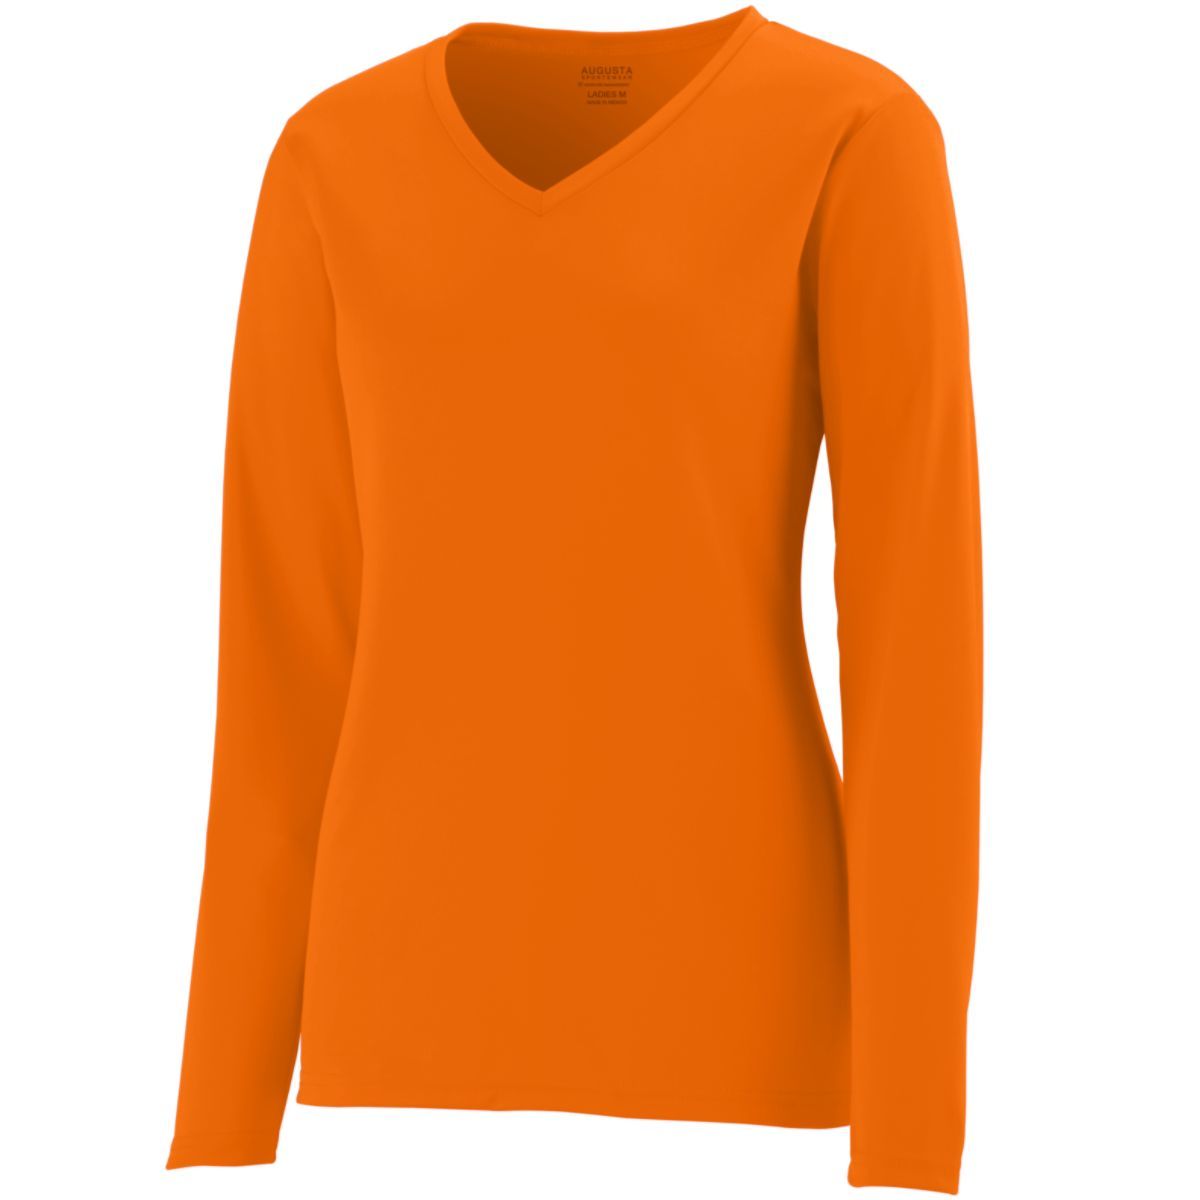 Augusta Sportswear Ladies Long Sleeve Wicking T-Shirt in Power Orange  -Part of the Ladies, Ladies-Tee-Shirt, T-Shirts, Augusta-Products, Shirts product lines at KanaleyCreations.com